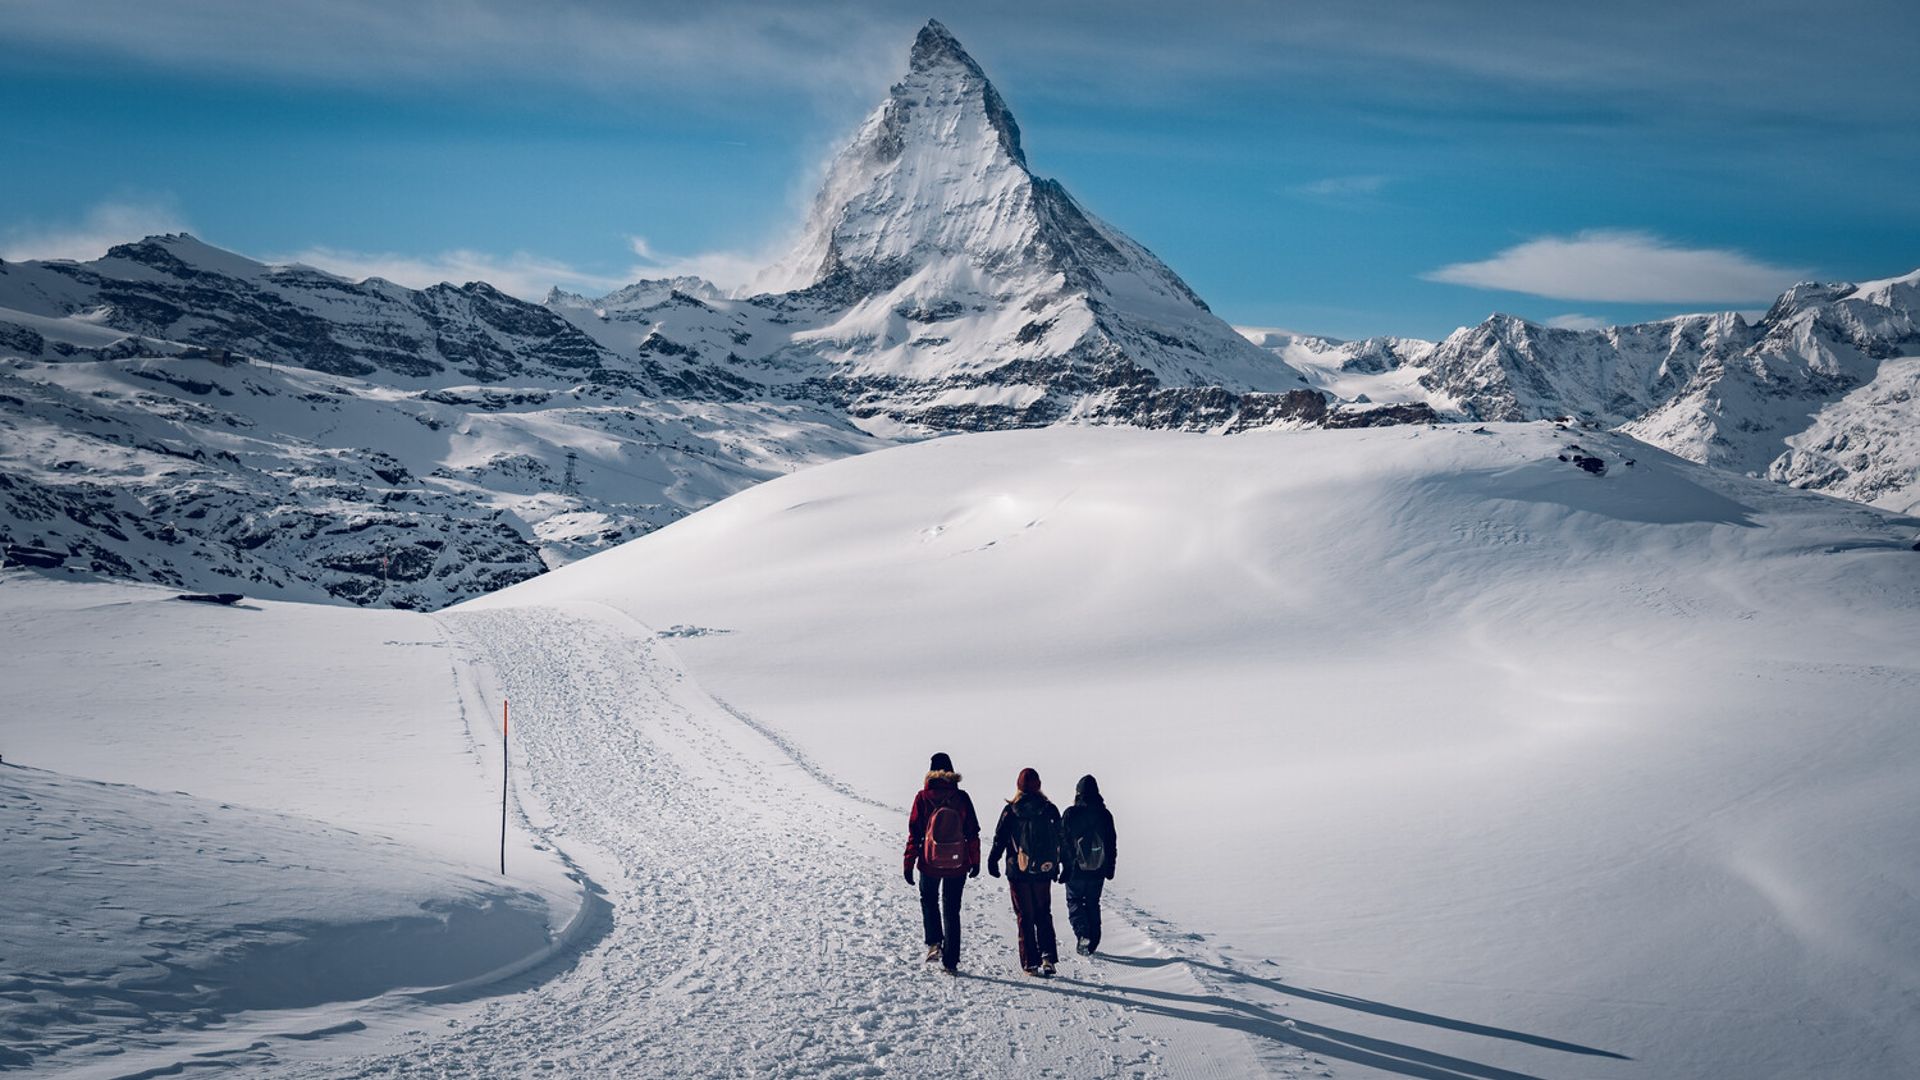 Winter hiking with the best view of the Matterhorn on Gornergrat